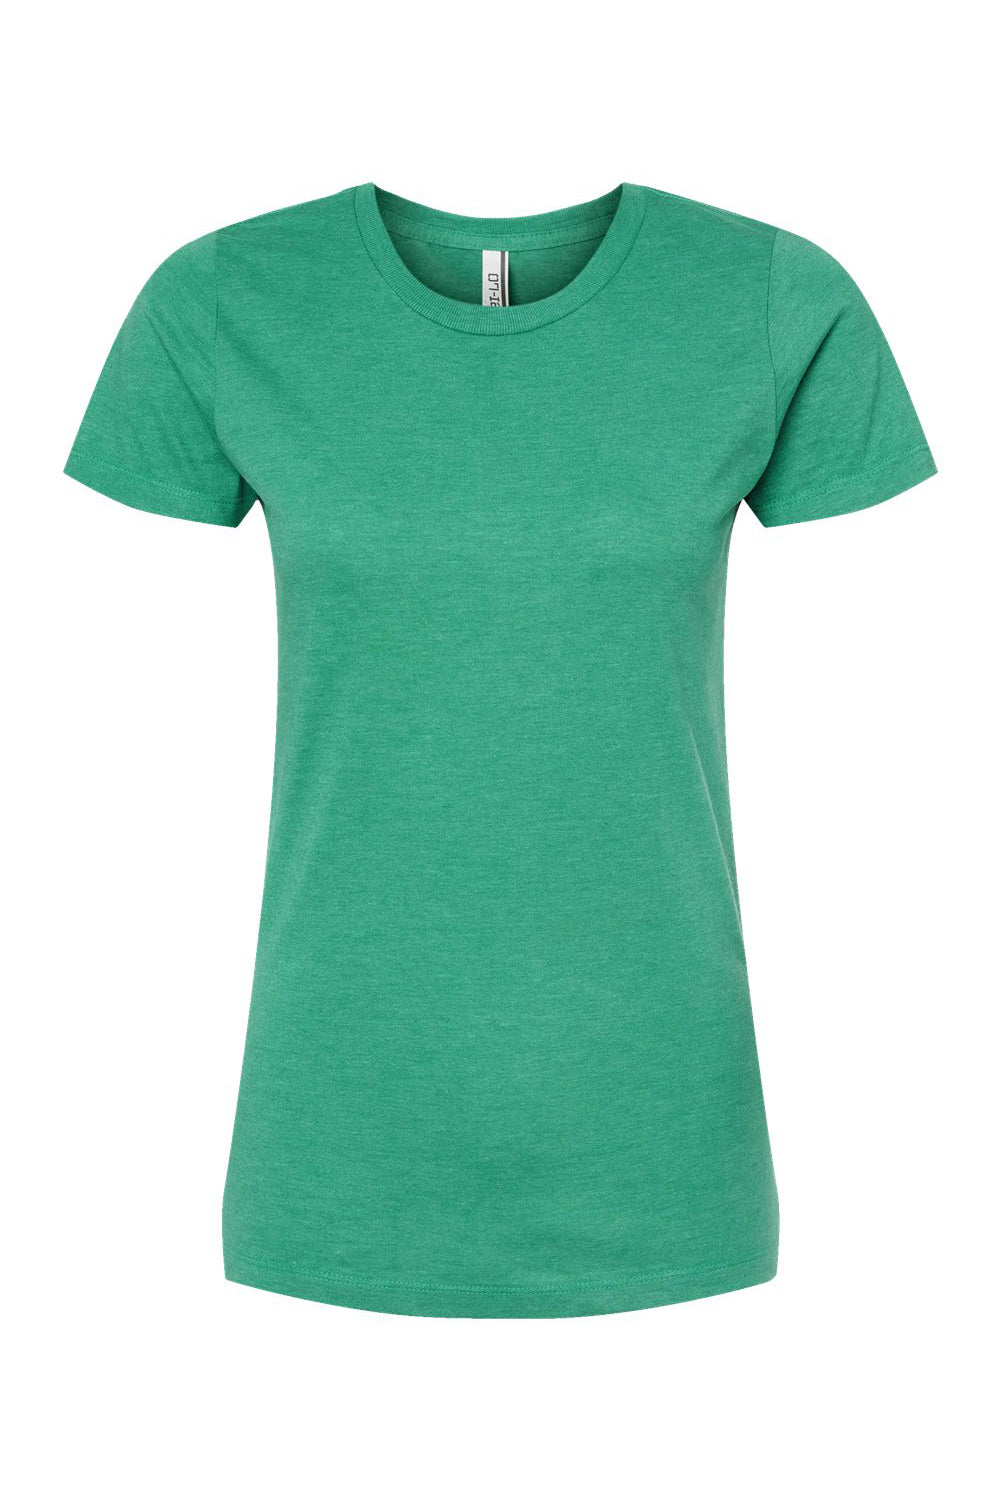 Tultex 542 Womens Premium Short Sleeve Crewneck T-Shirt Heather Kelly Green Flat Front